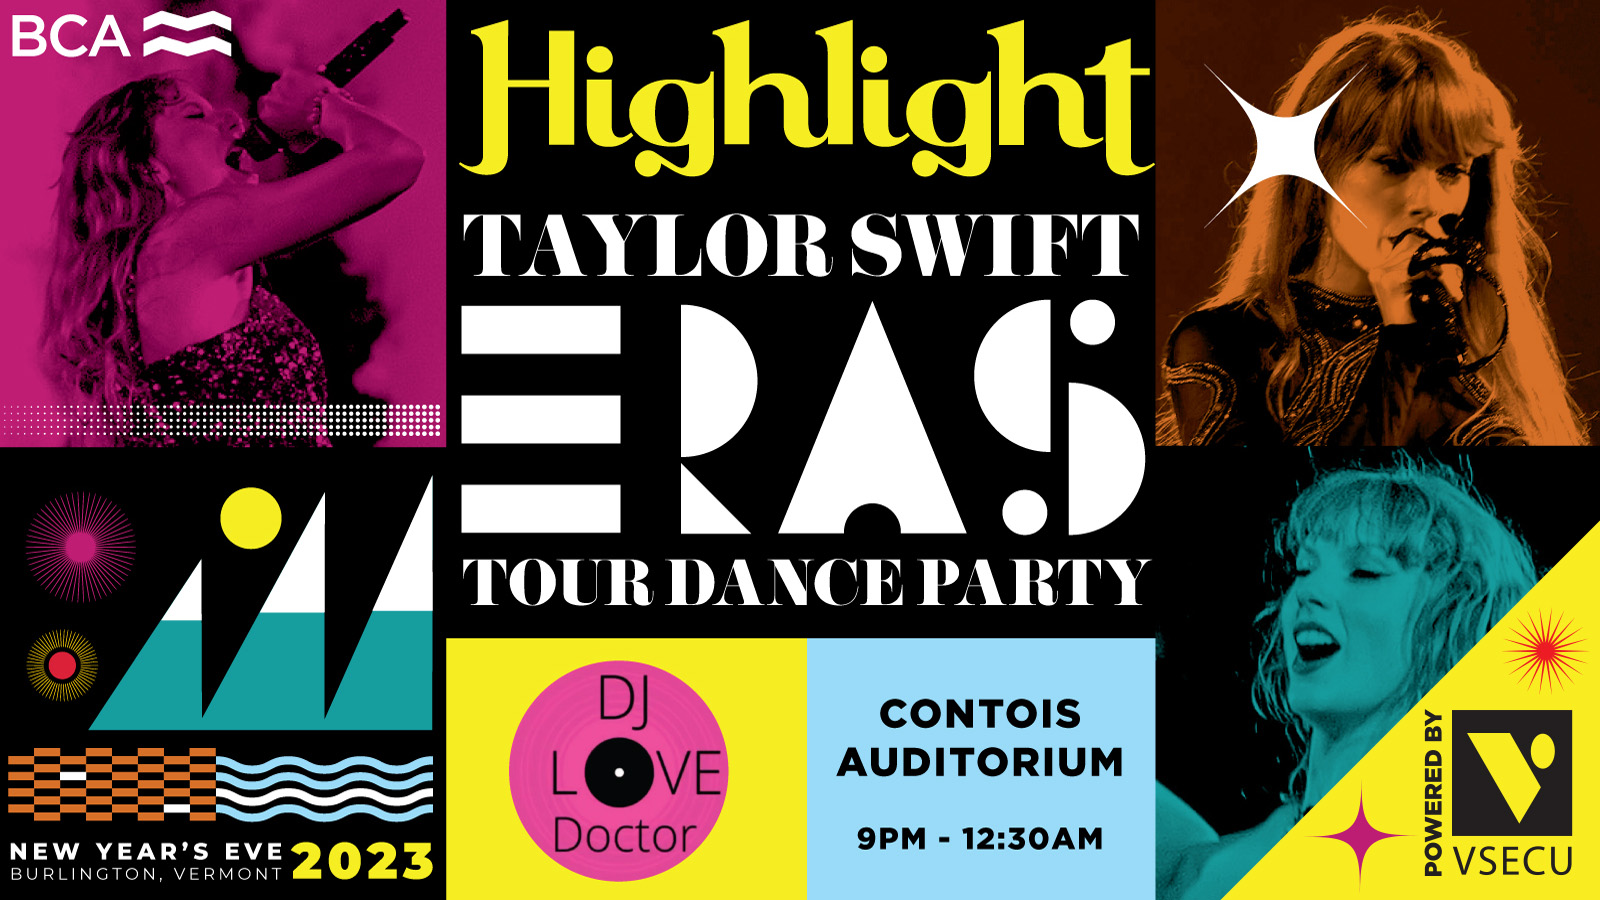 Taylor Swift Eras Tour Dance Party - Highlight